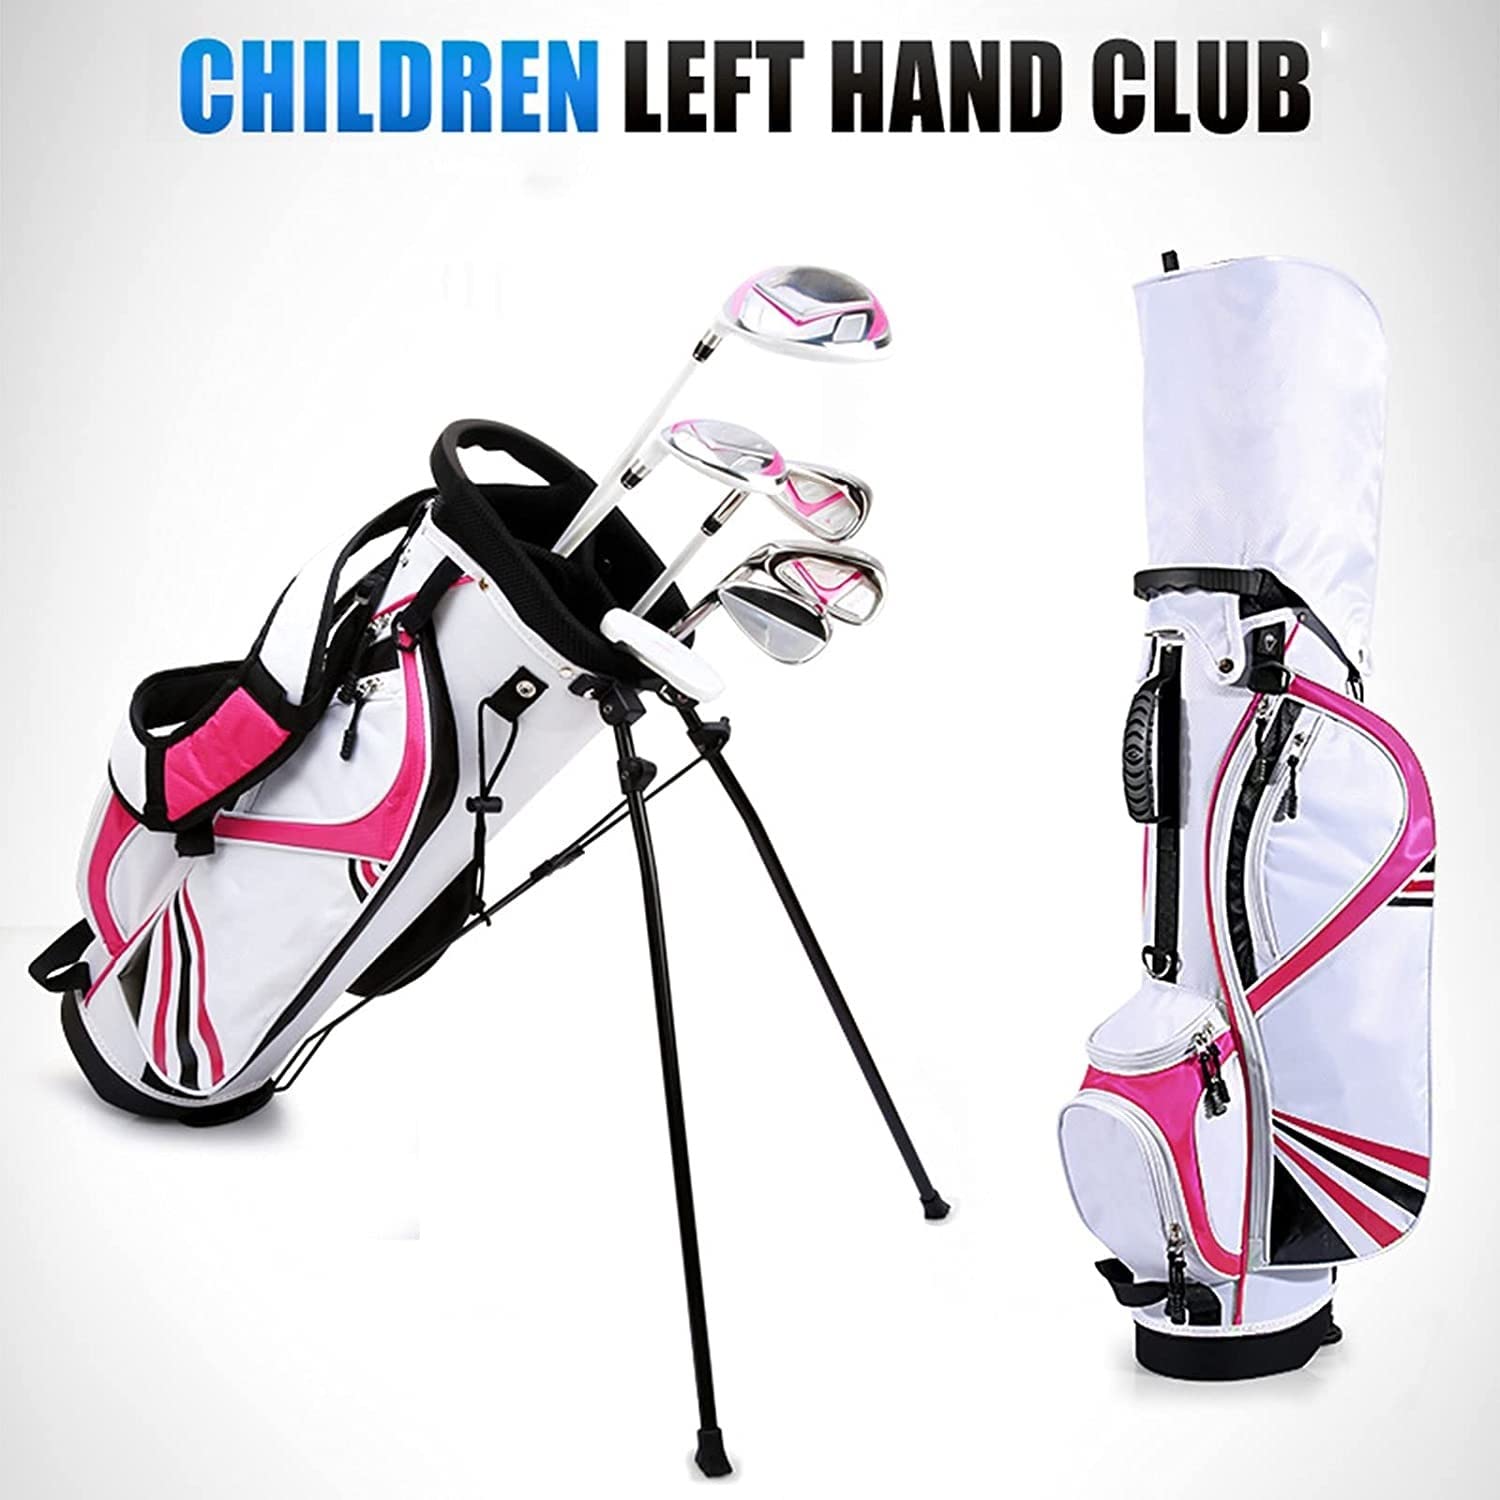 New Golf Sets Complete Golf Club Set for Children Junior Left Hand - Kids Golf Set for Beginners Practice Pole with Bag for 120-165cm Height Boy Girl Kids (Color : Pink, Size : 135-155cm)